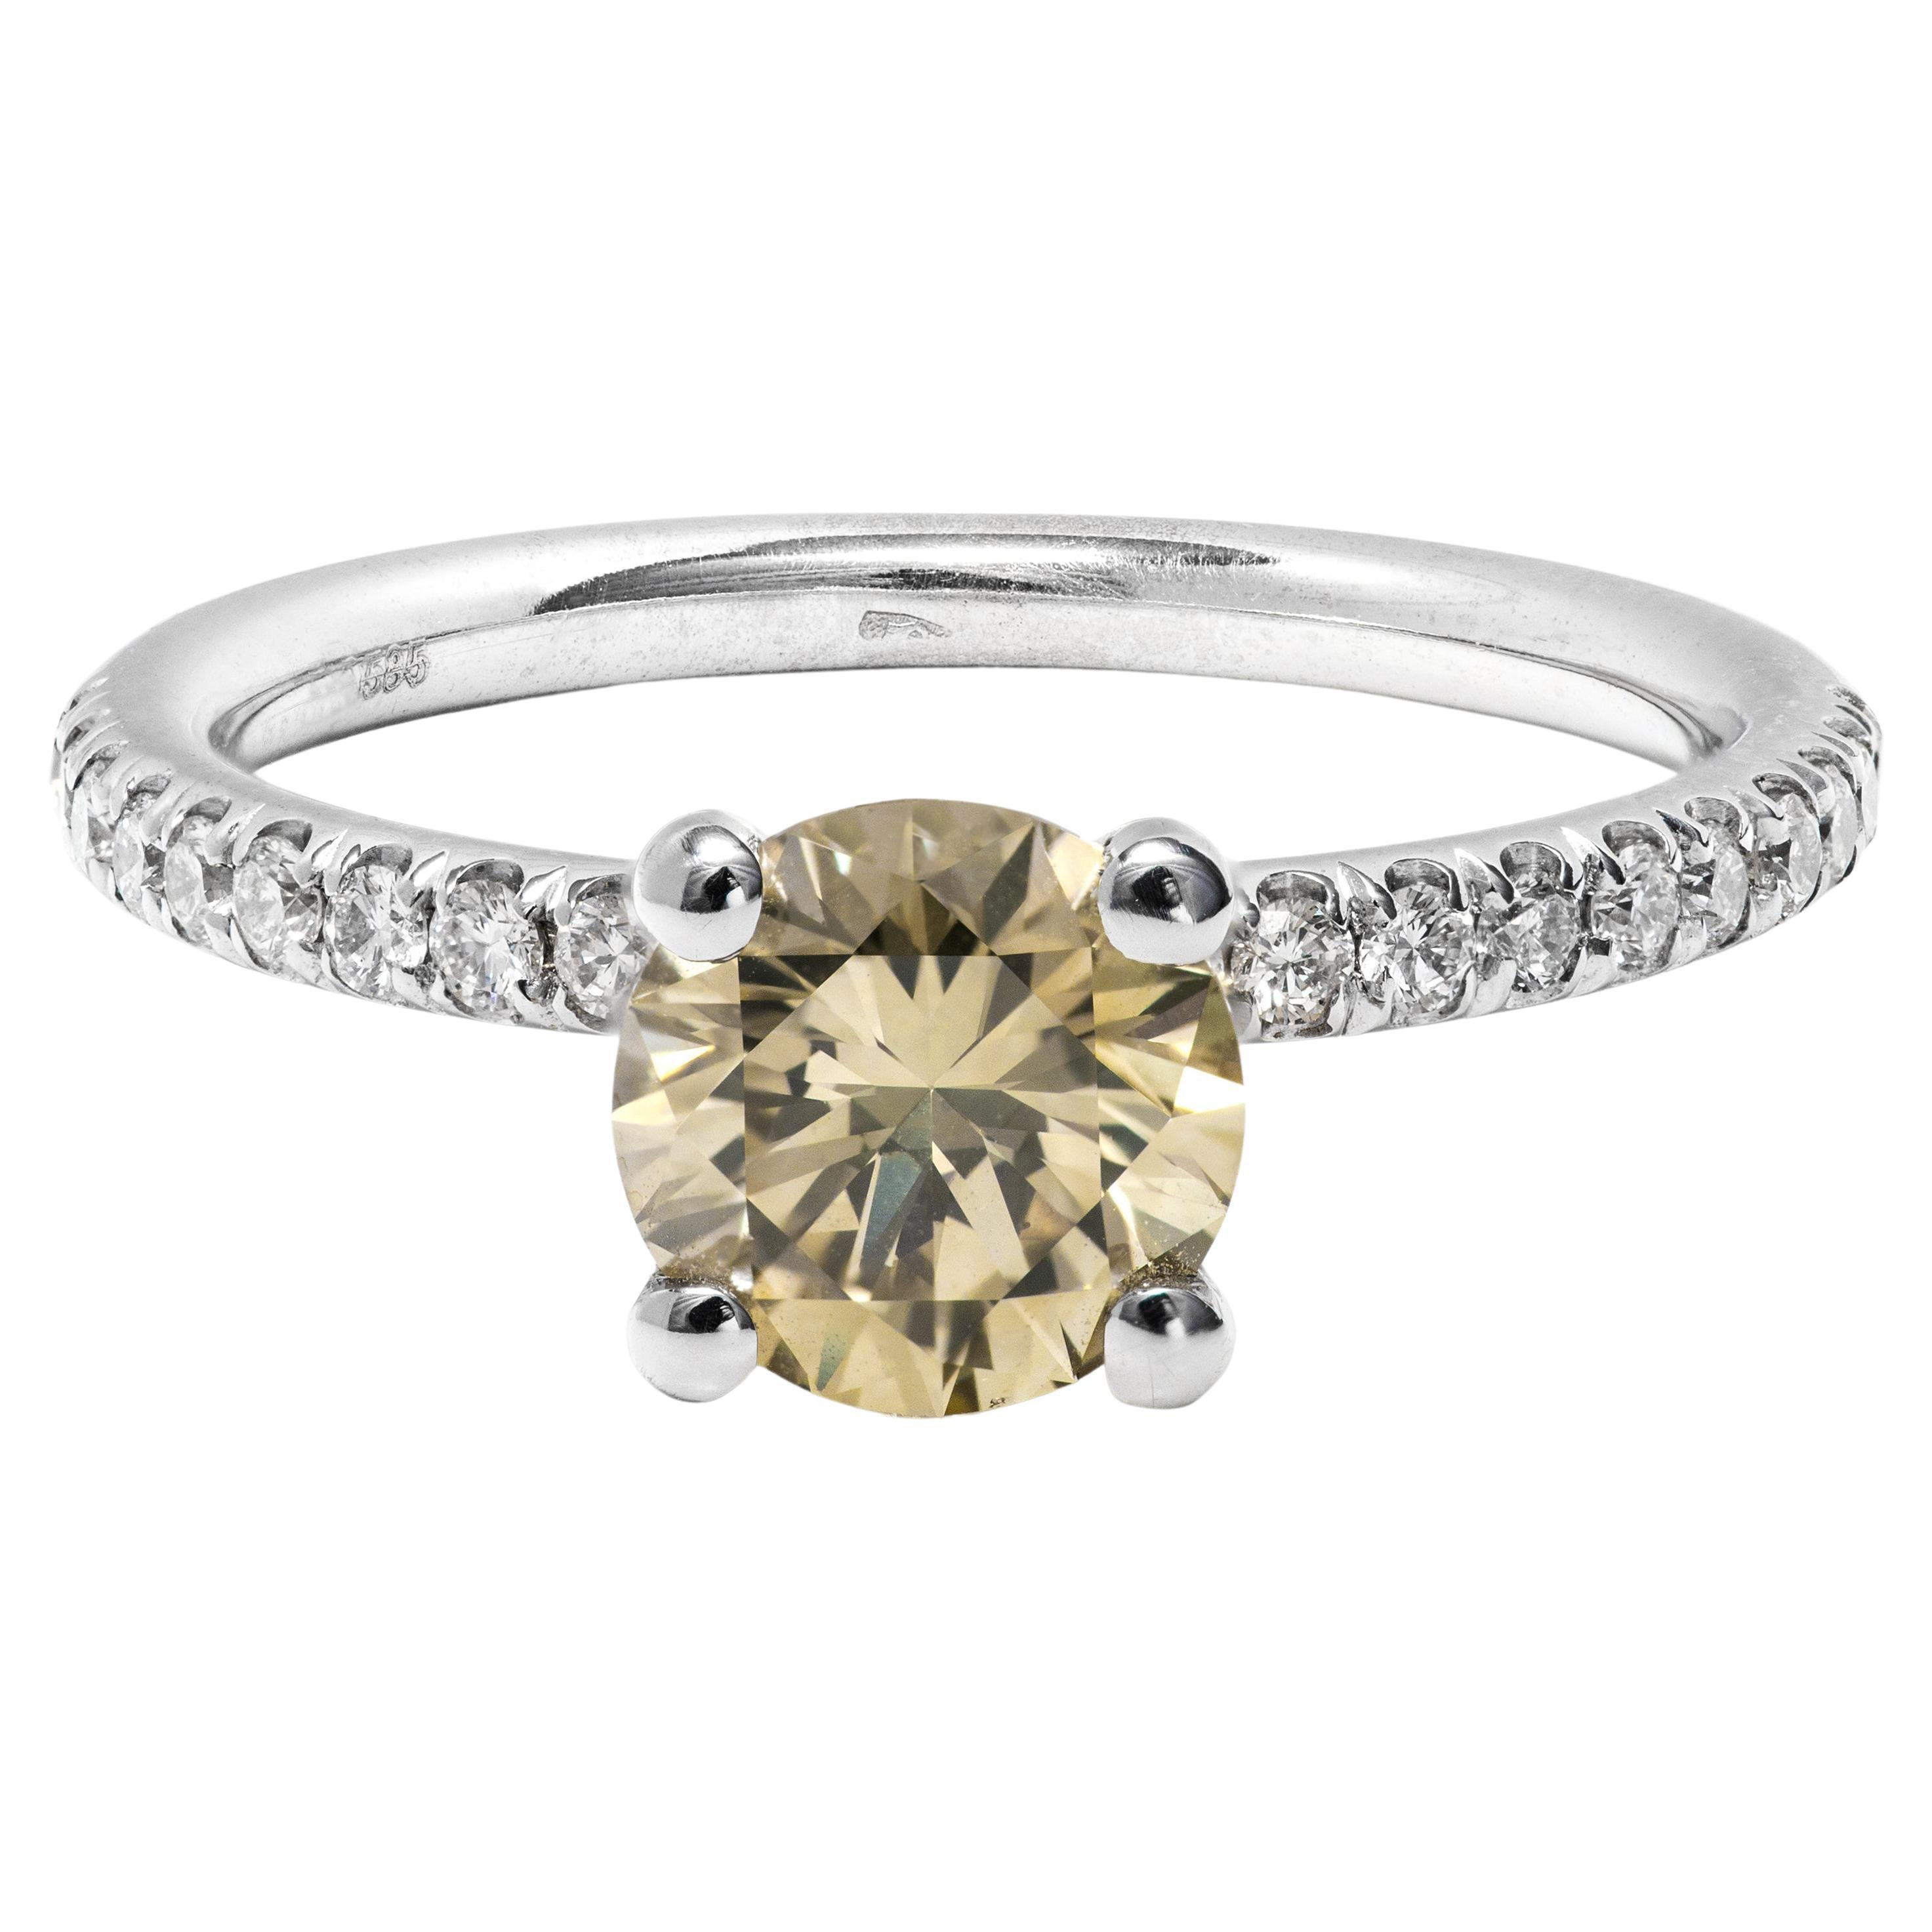 1.31 Ct Natural Fancy Brownish Yellow Diamond Ring, No Reserve Price